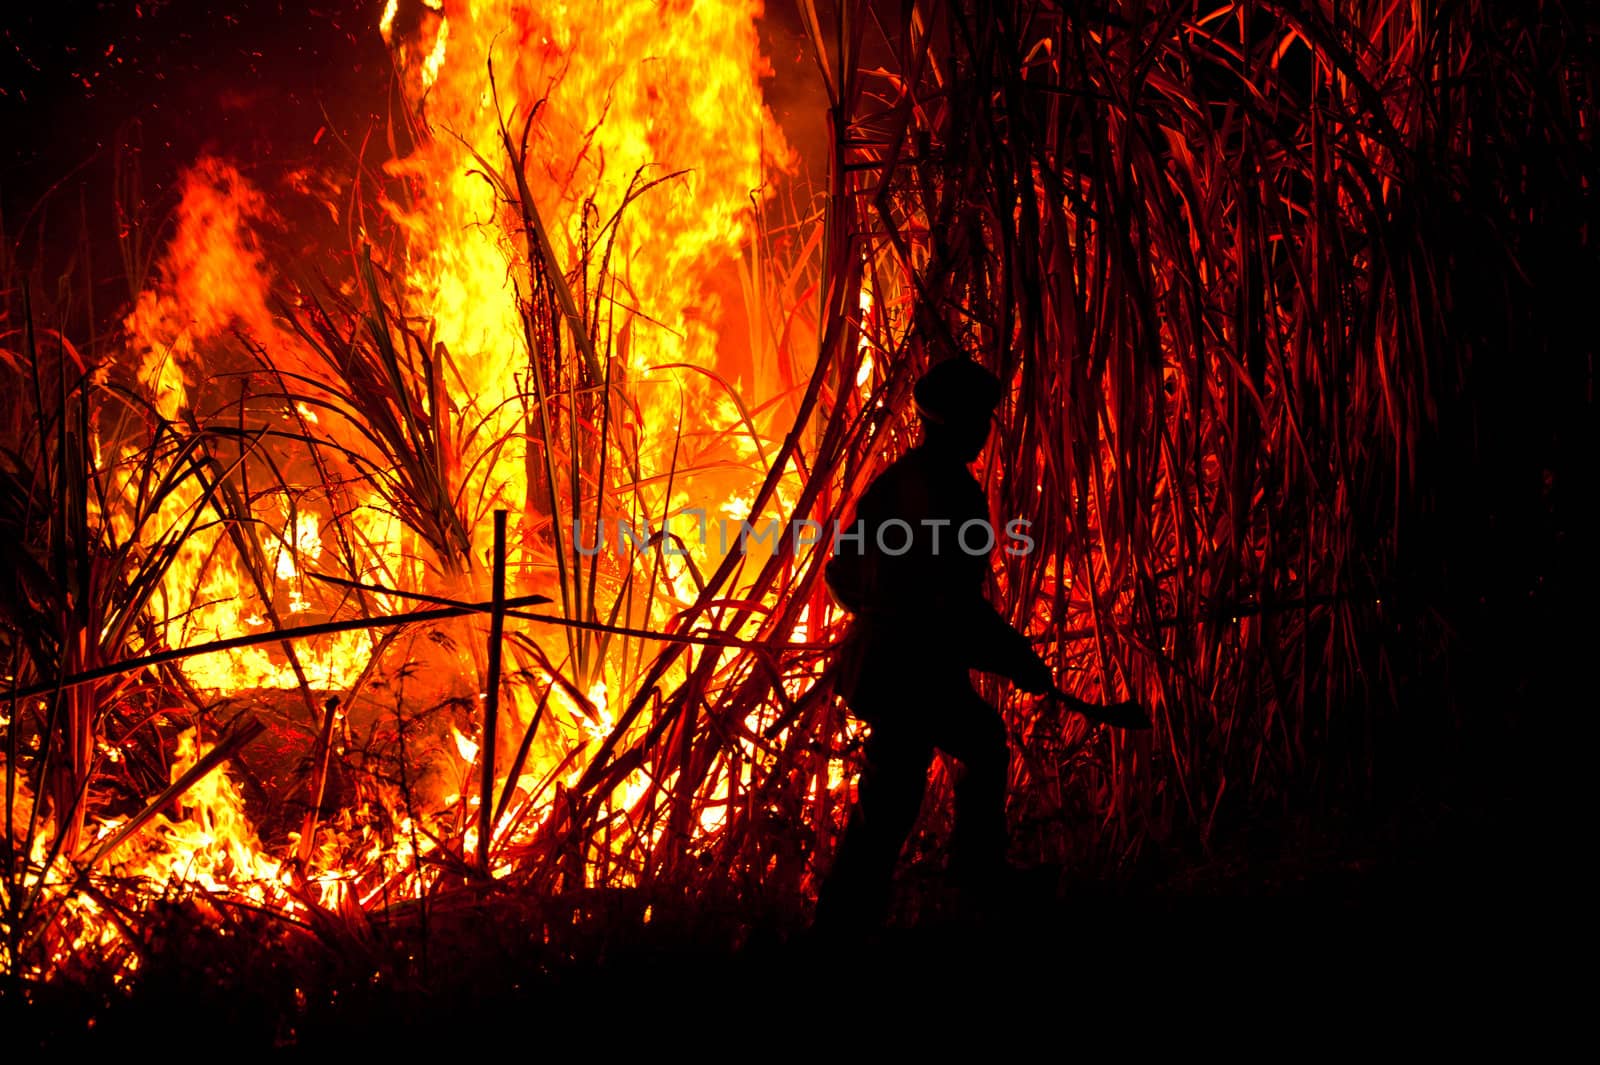 Big fire on the farmland by p.studio66